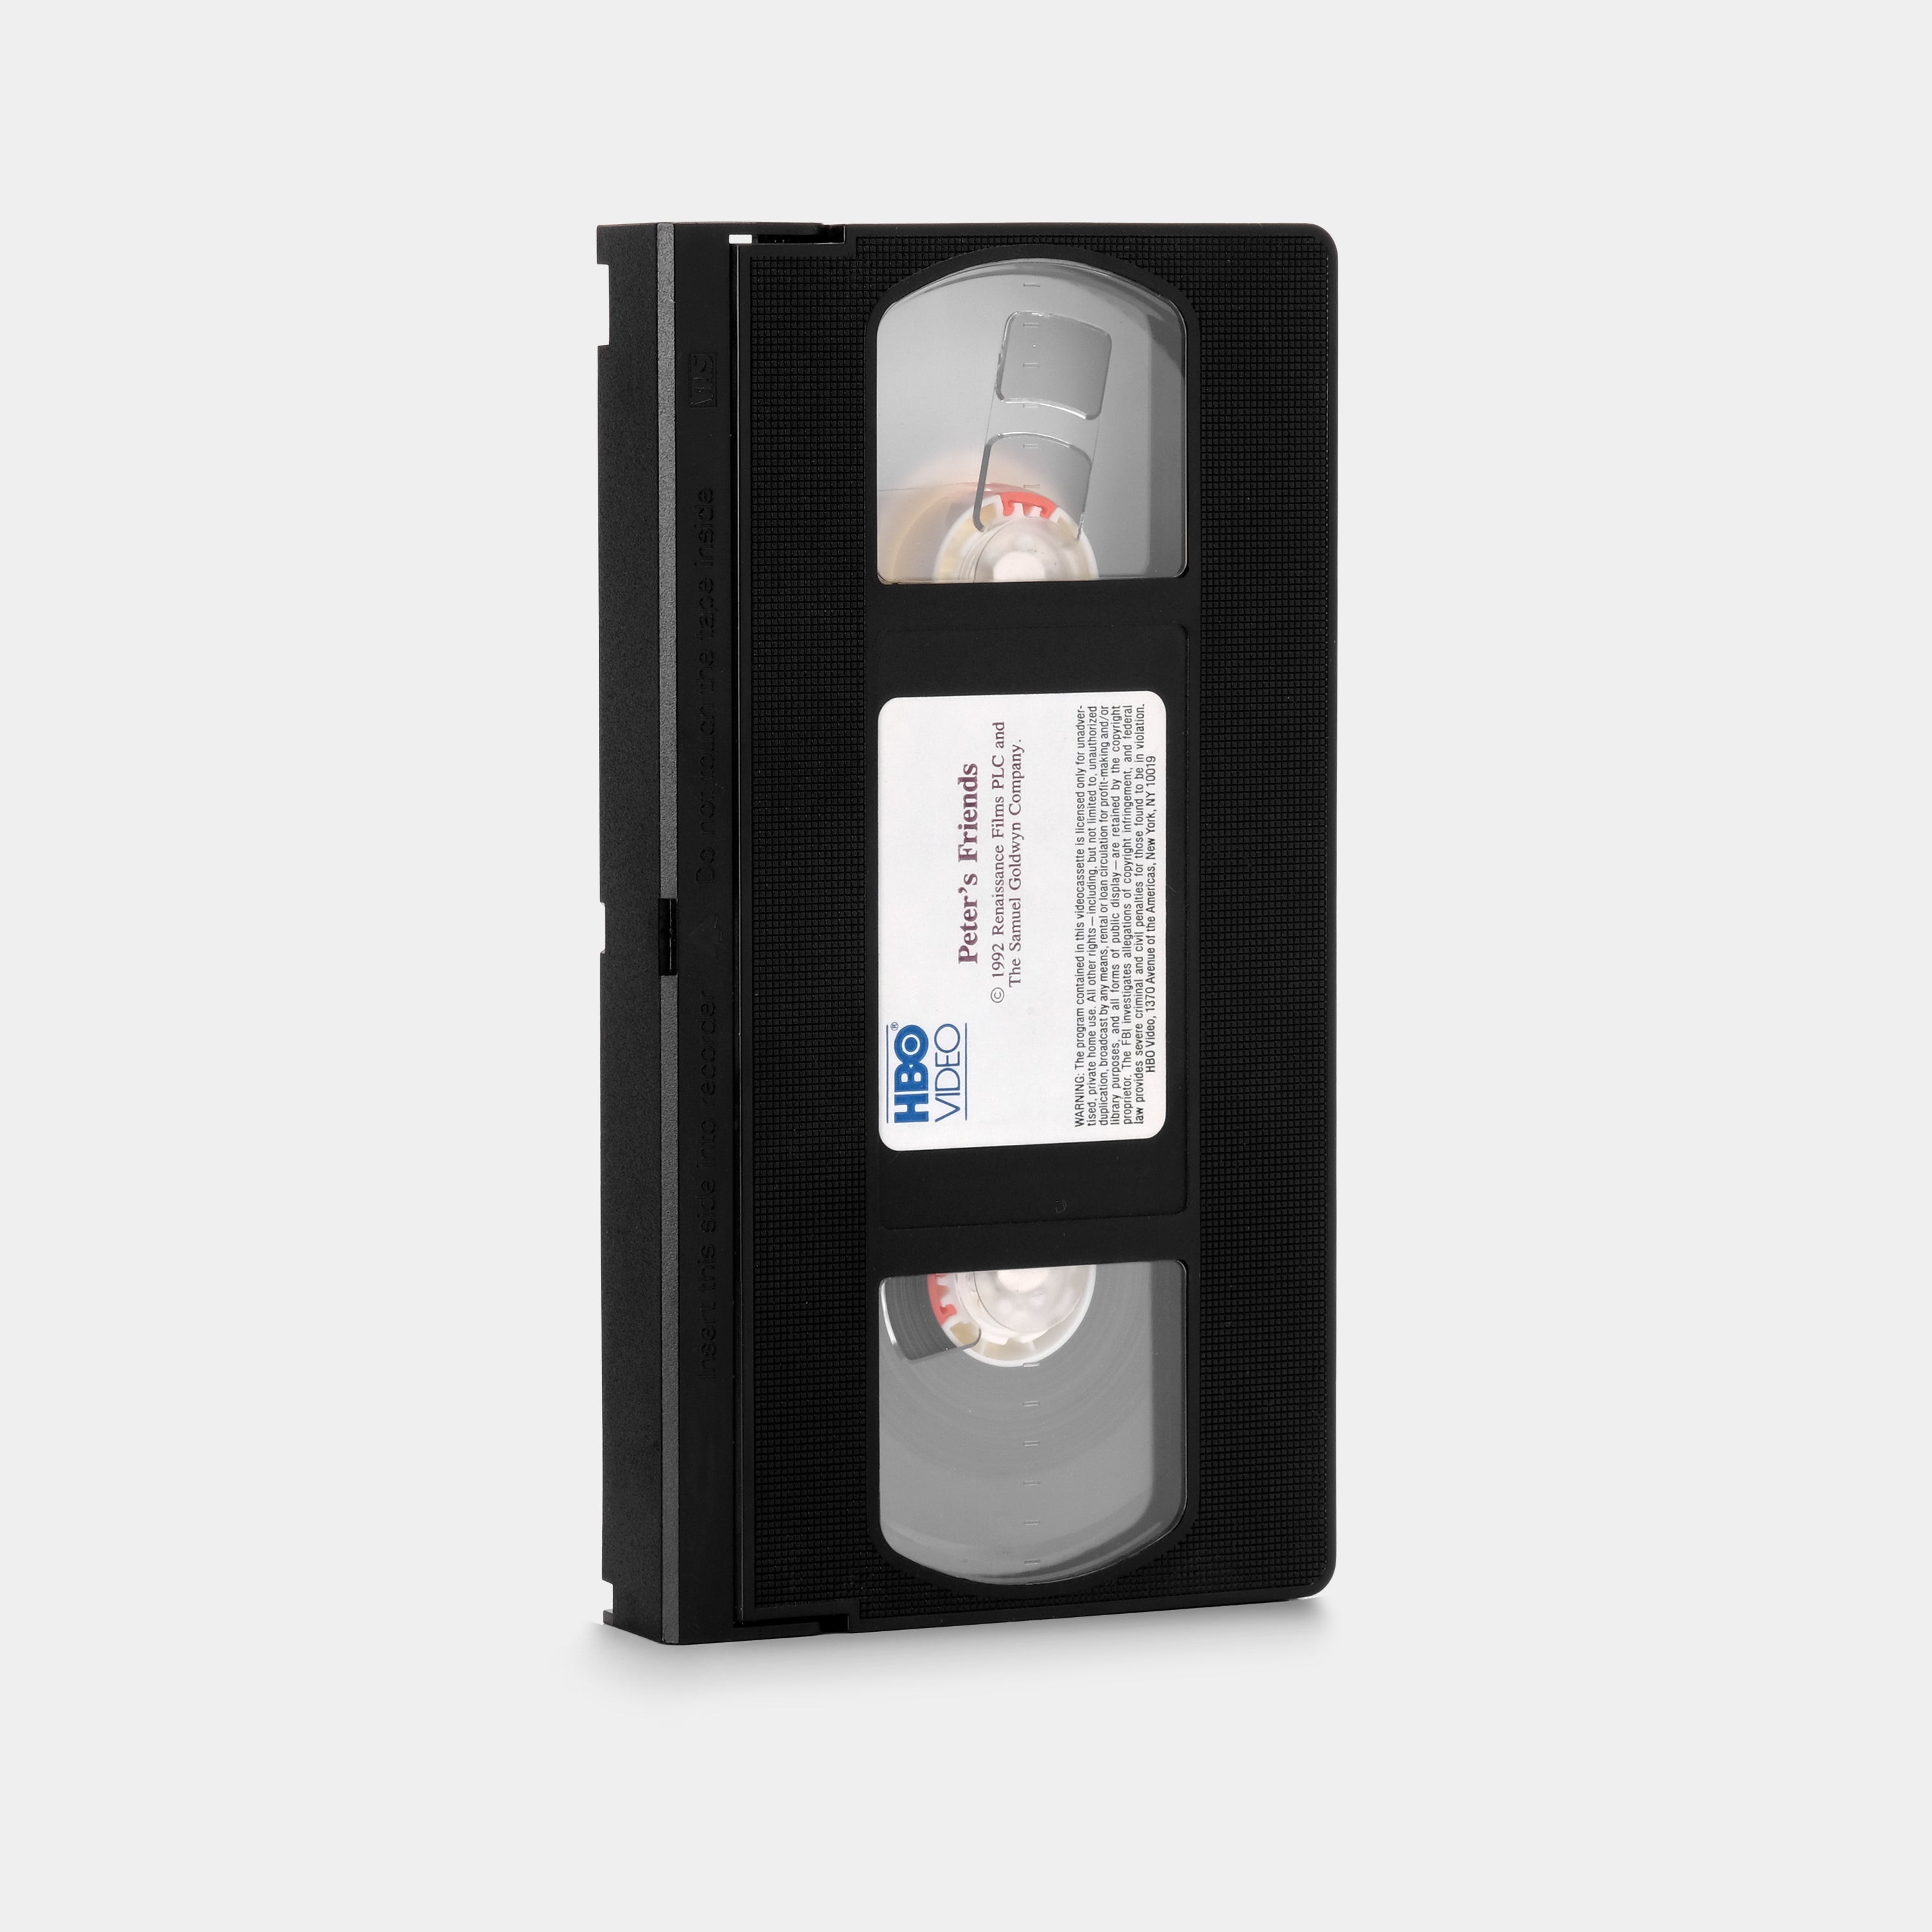 Peter's Friends VHS Tape